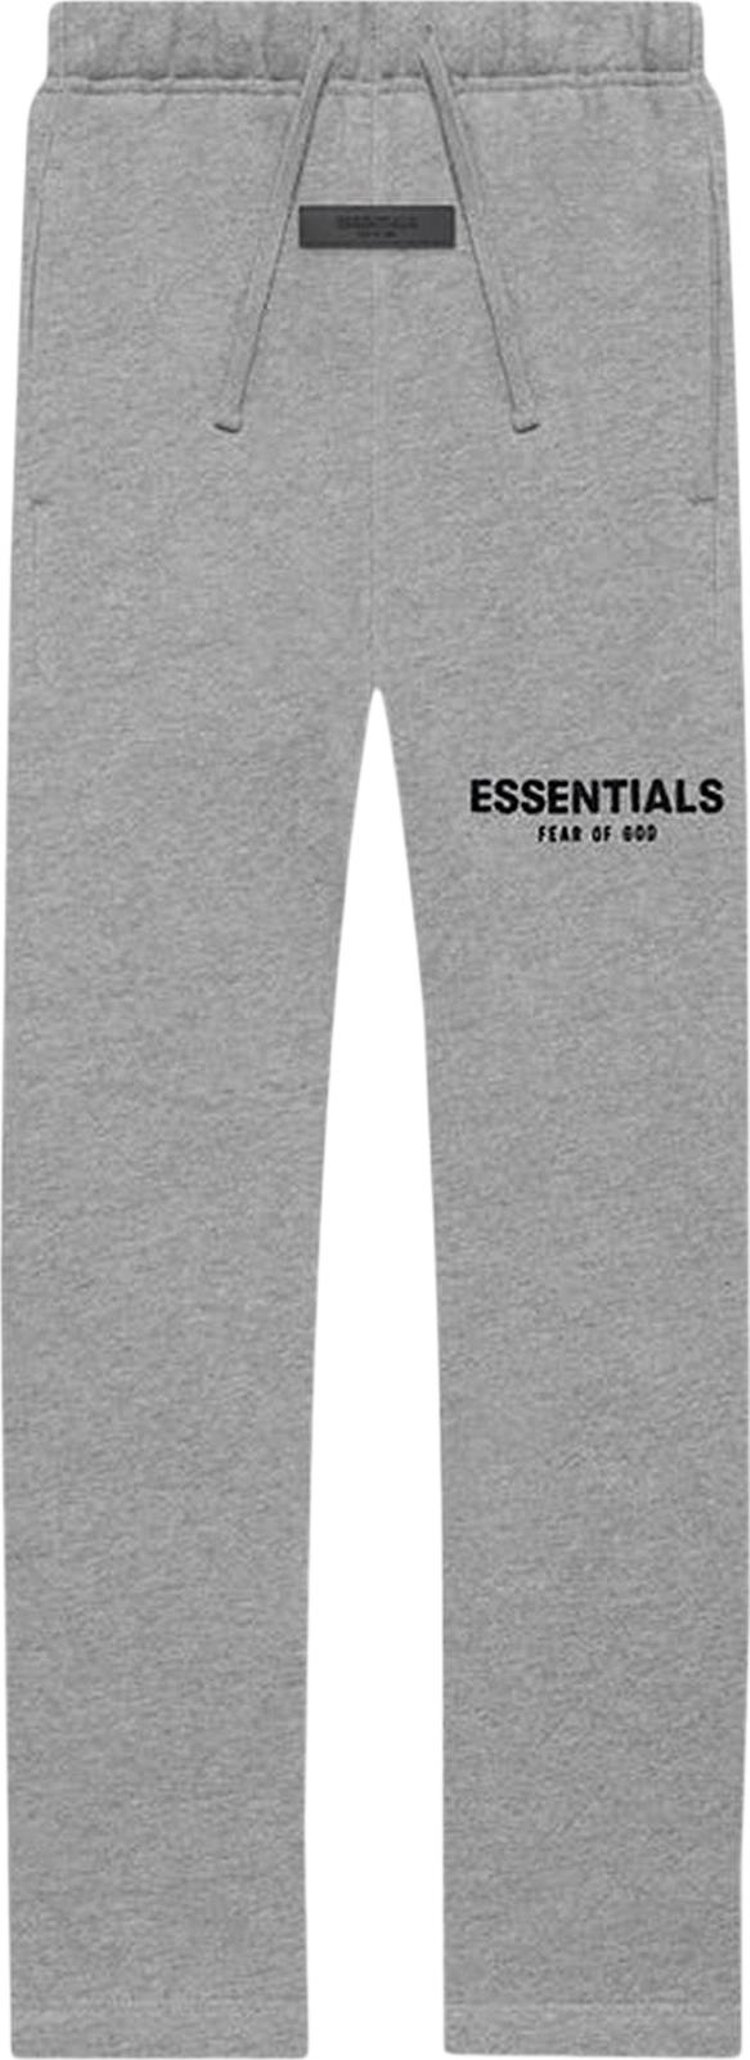 Essentials Grey Sweatpants